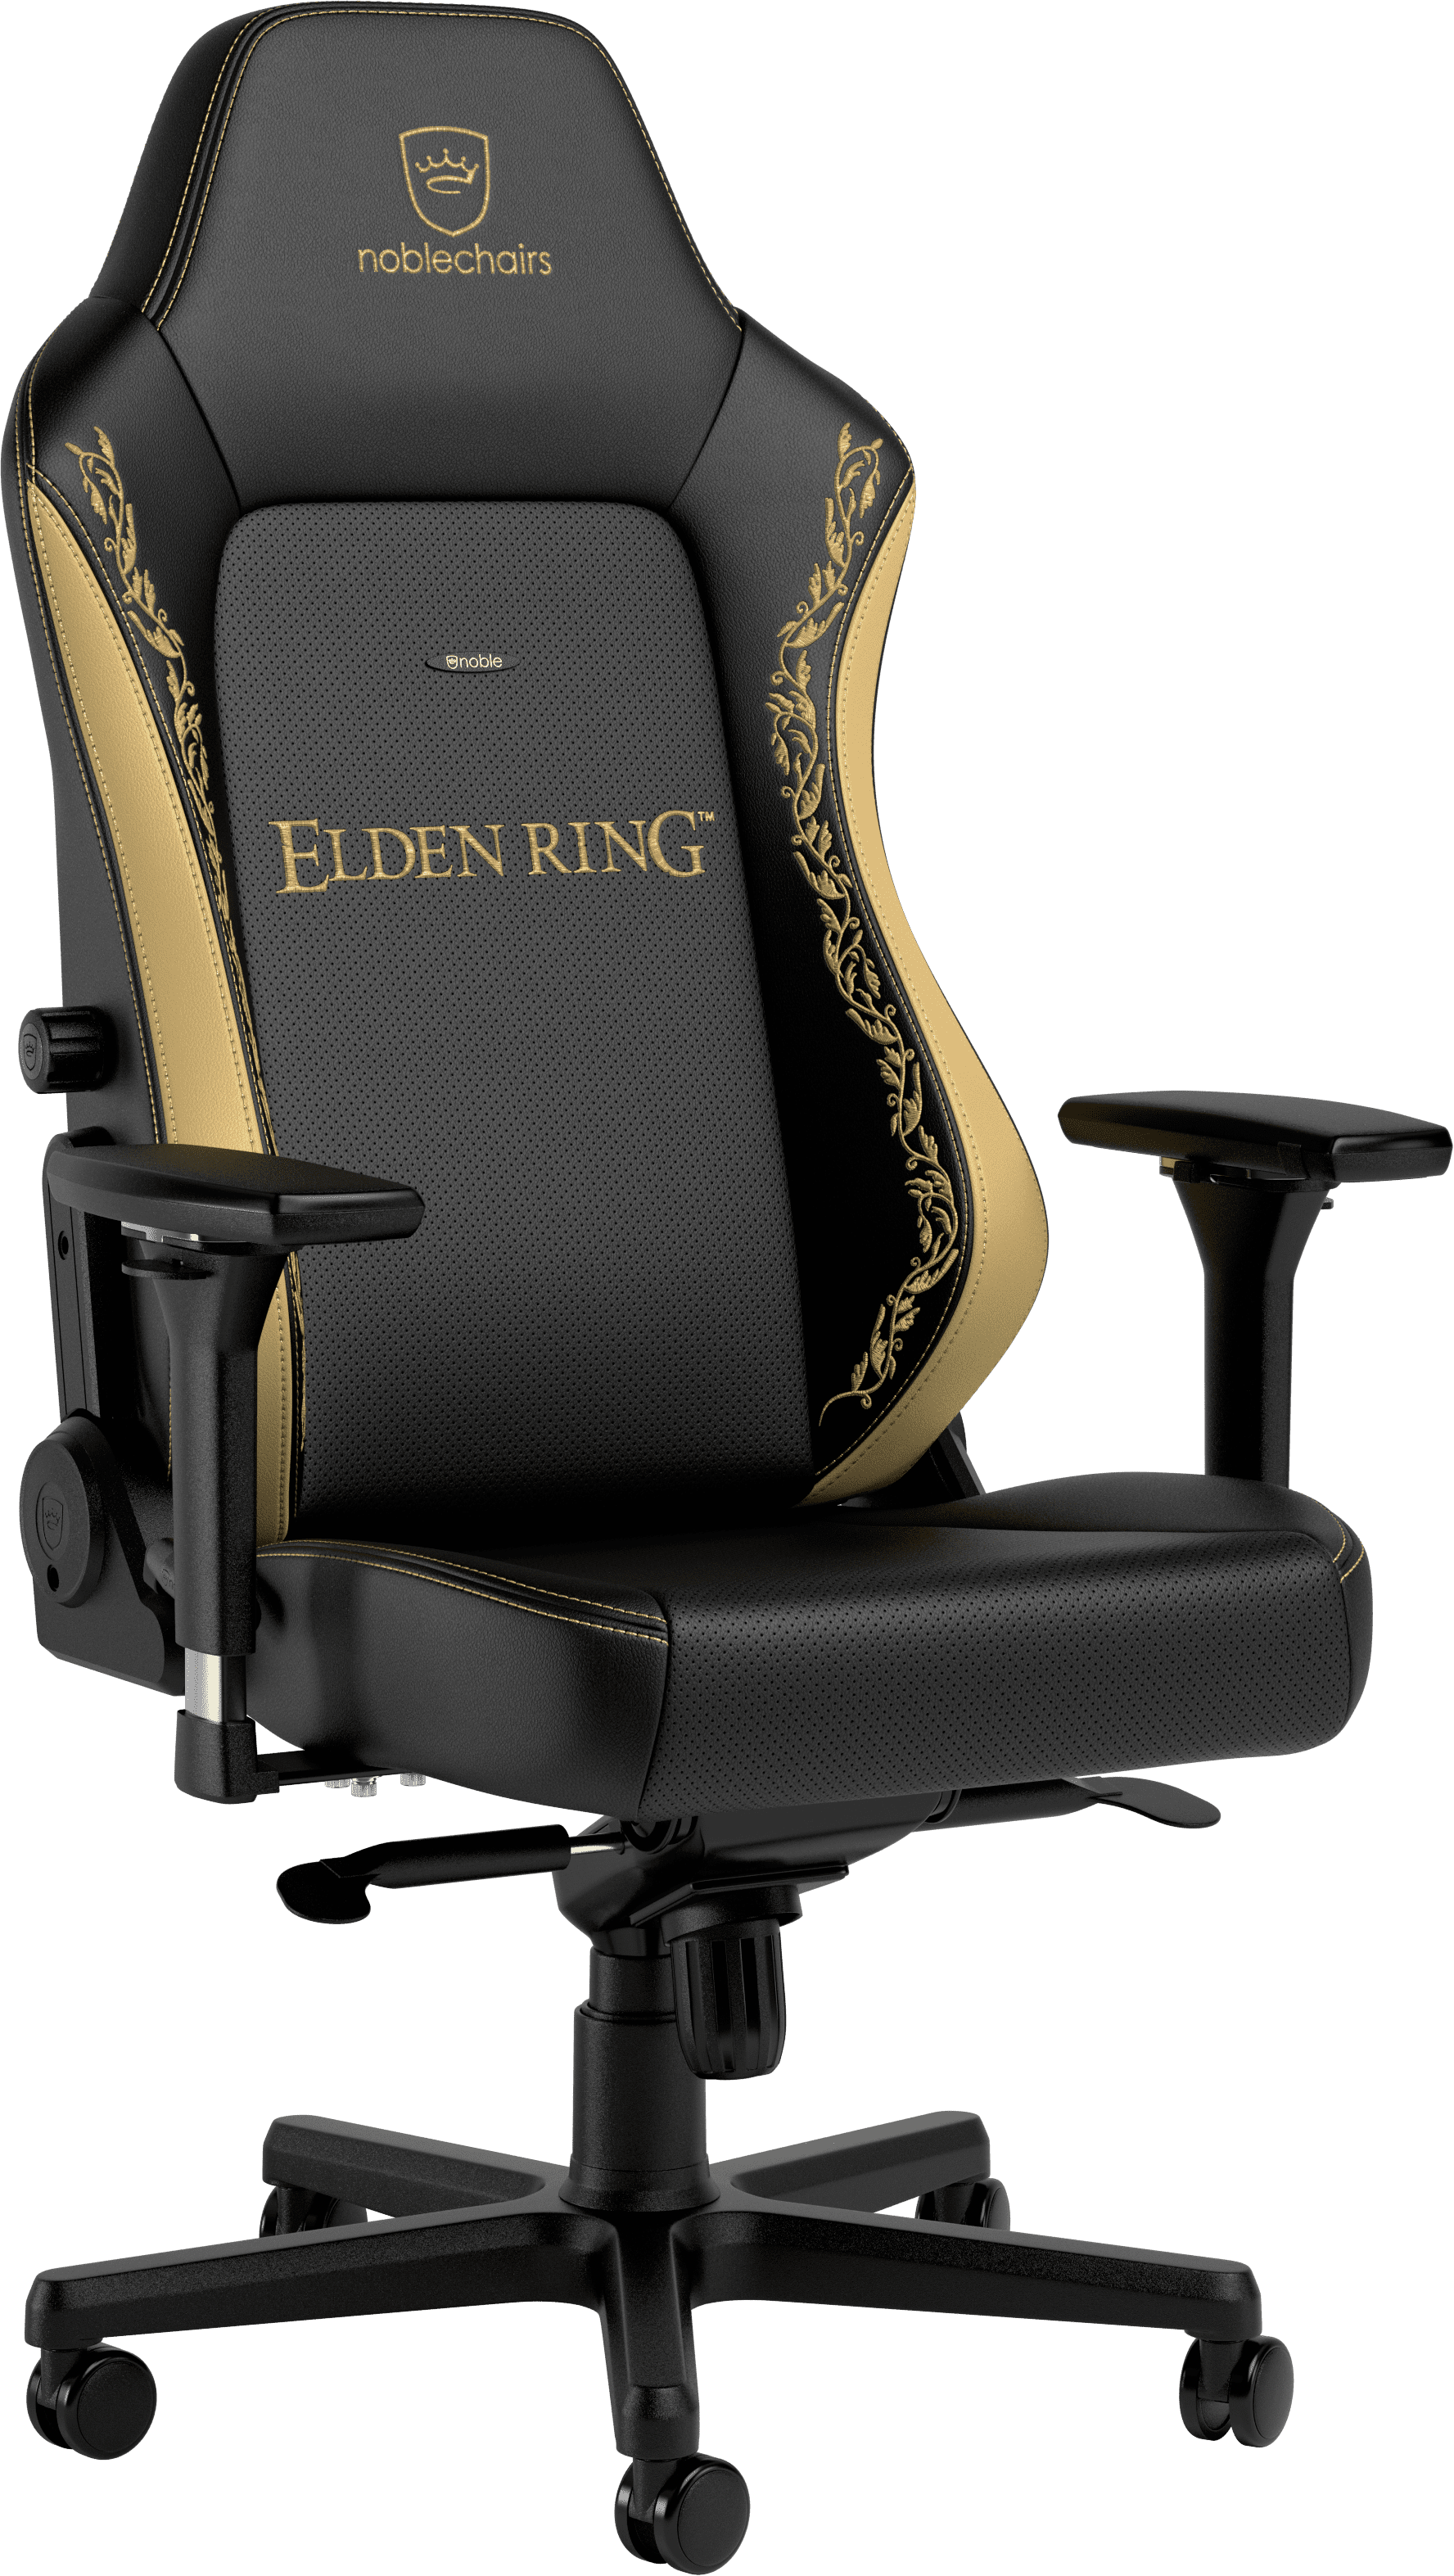 ergonomic design noblechairs HERO Elden Ring Edition